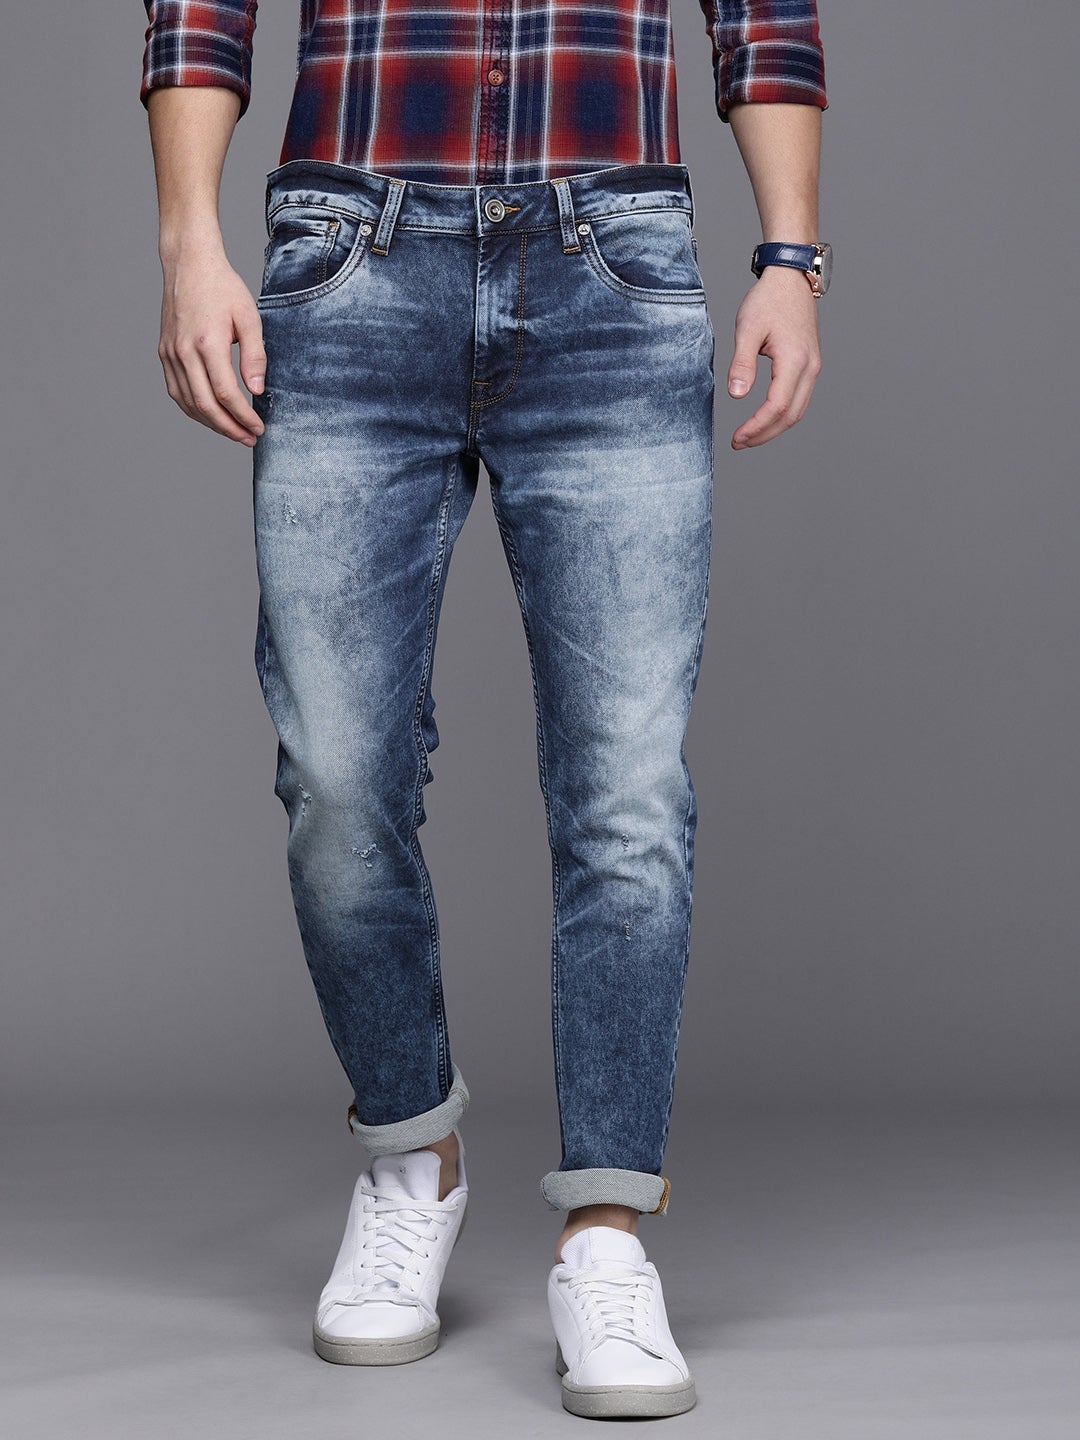 Voi Jeans | Men's Mid Blue Track Skinny Stretchable Jeans (VOJN1644)